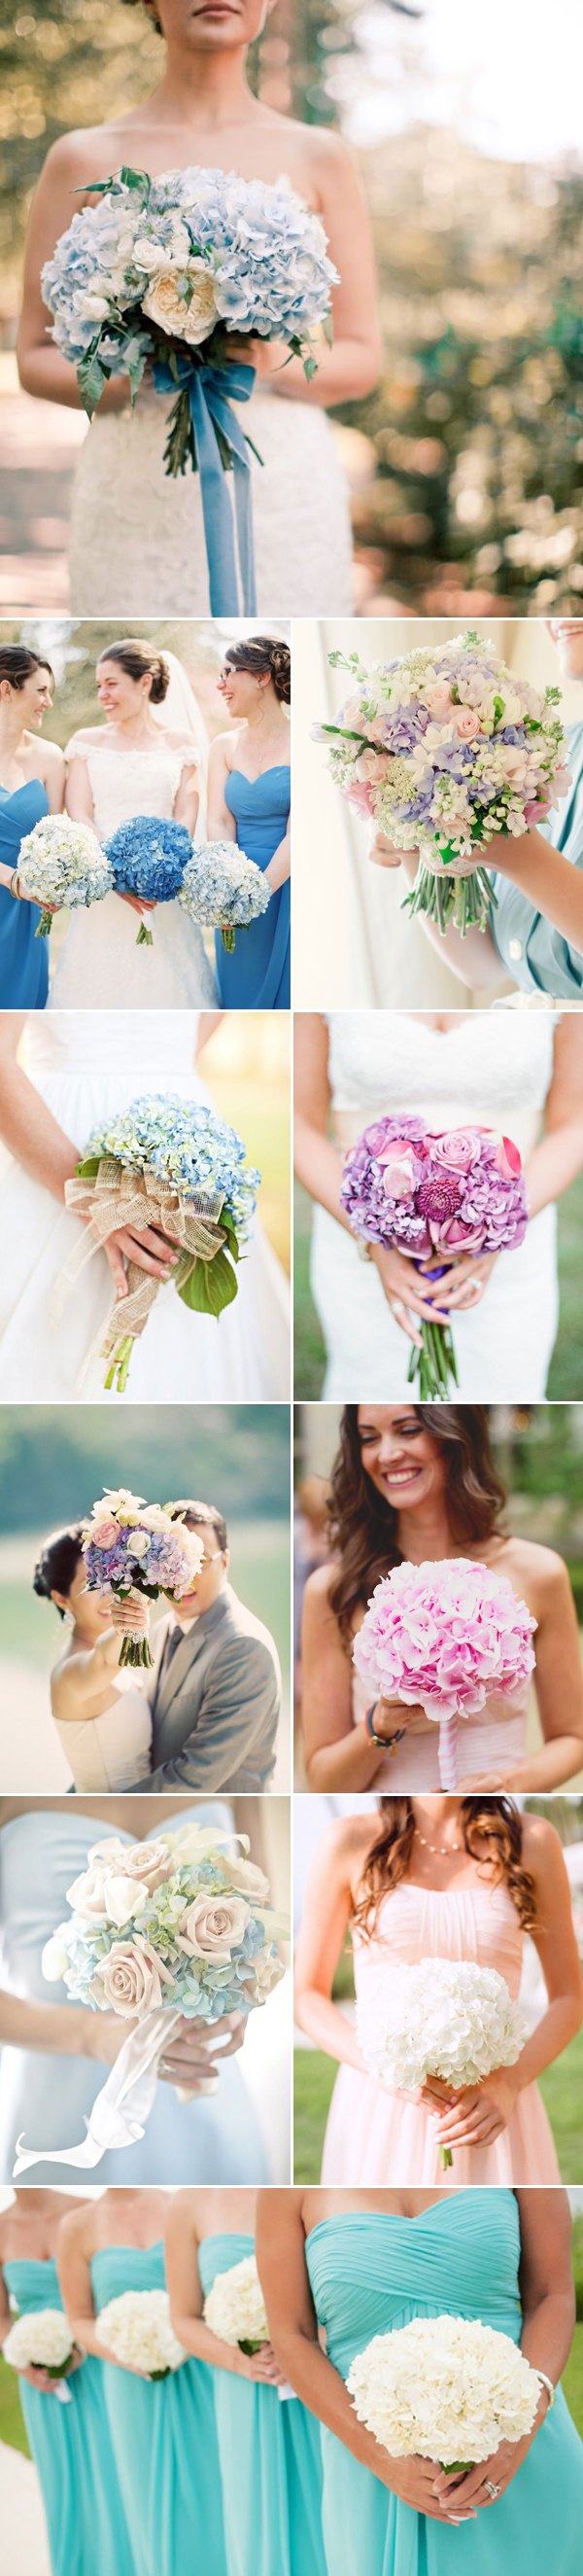 hydrangea wedding ideas - hydrangea wedding bouquet